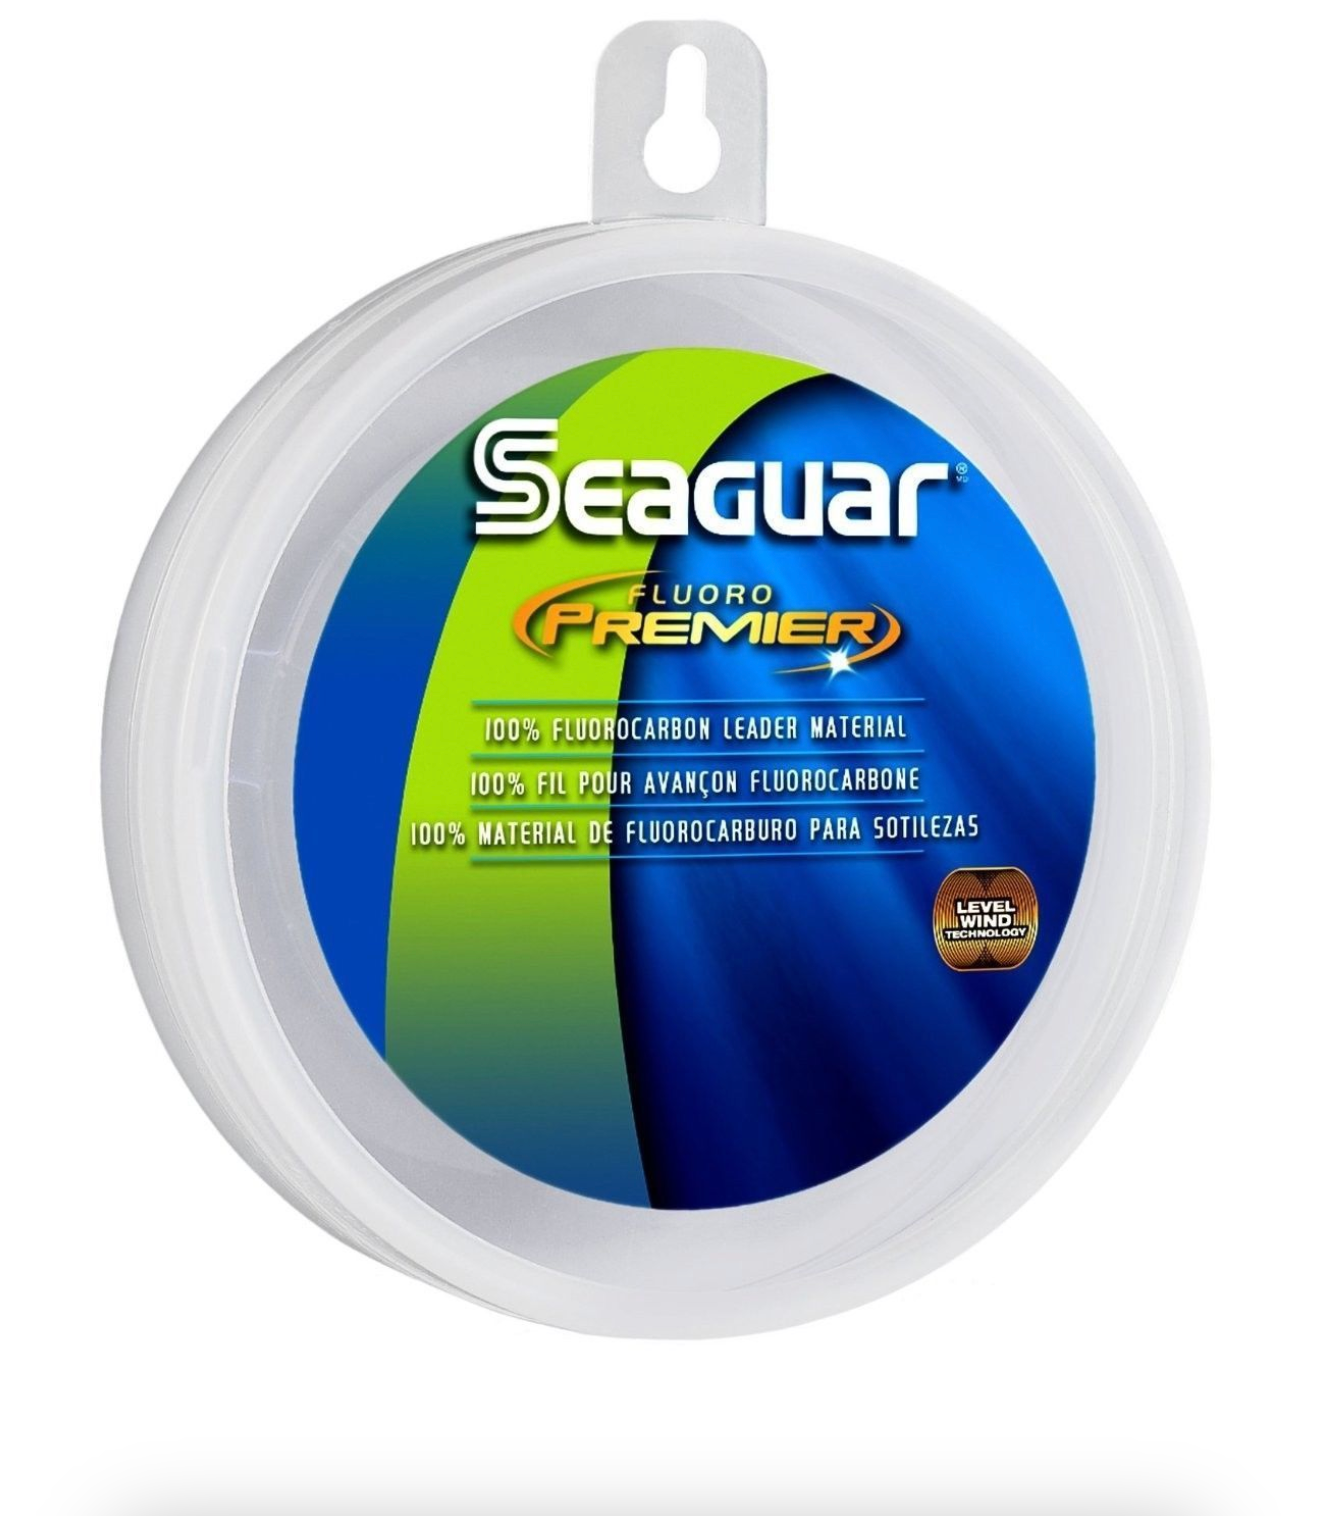 Seaguar Premier Fluorocarbon Leader 50yd Spool